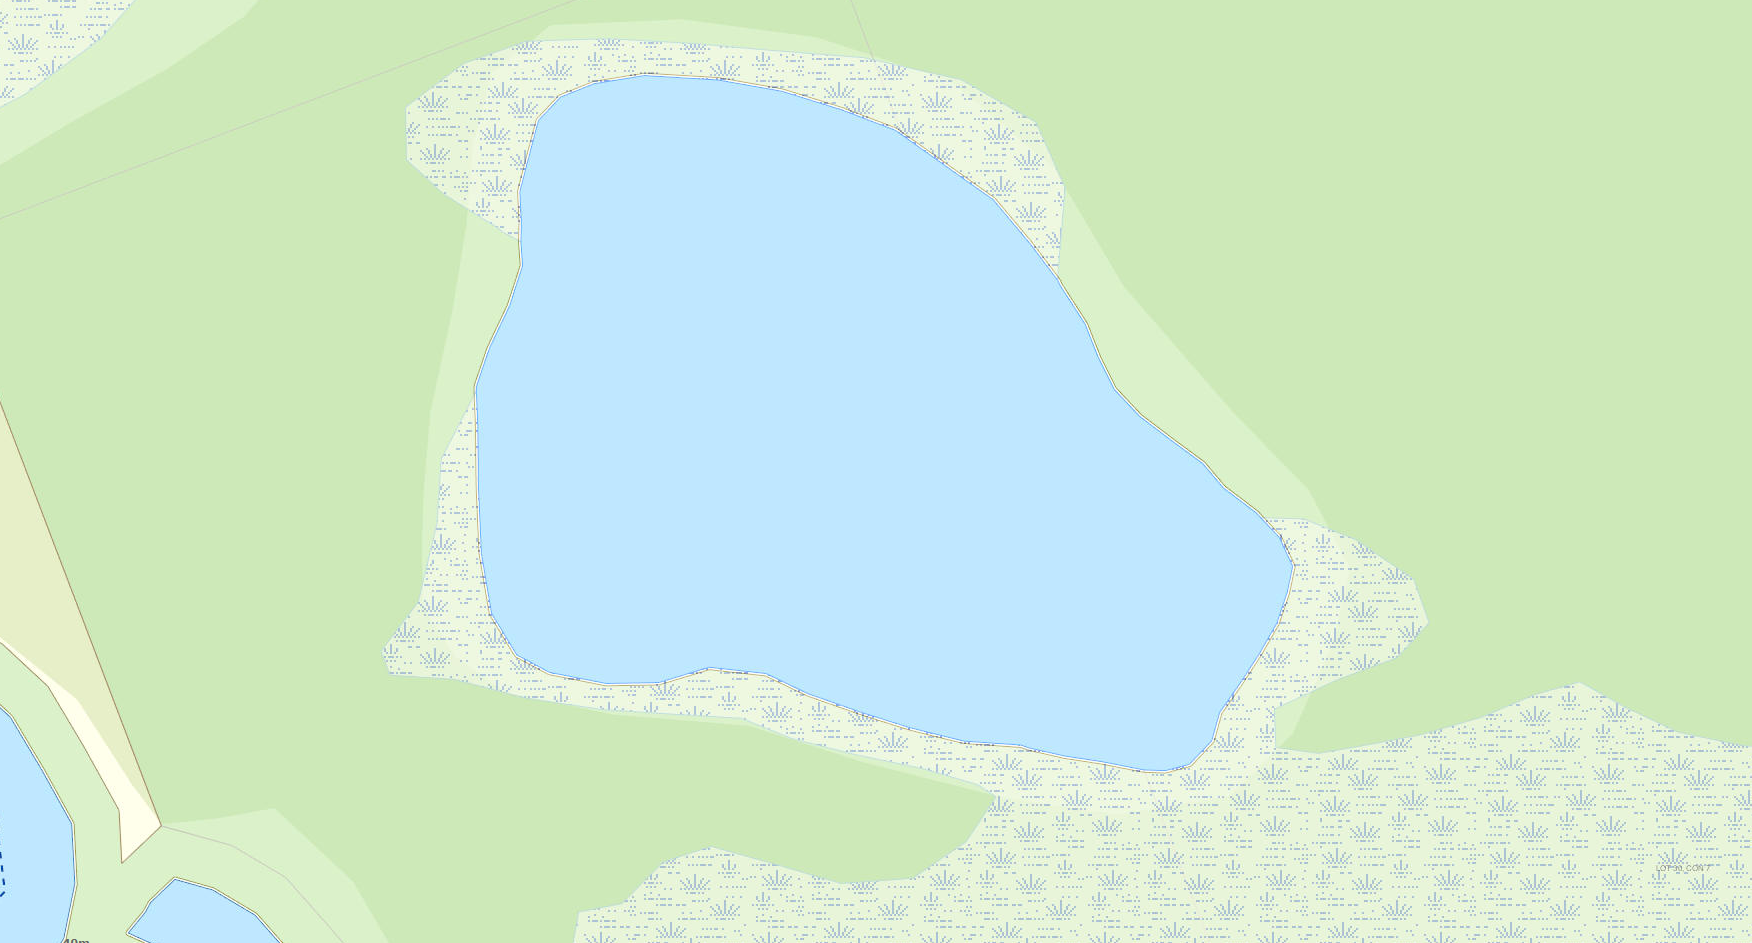 Allan's Lake Cadastral Map - Allan's Lake - Muskoka